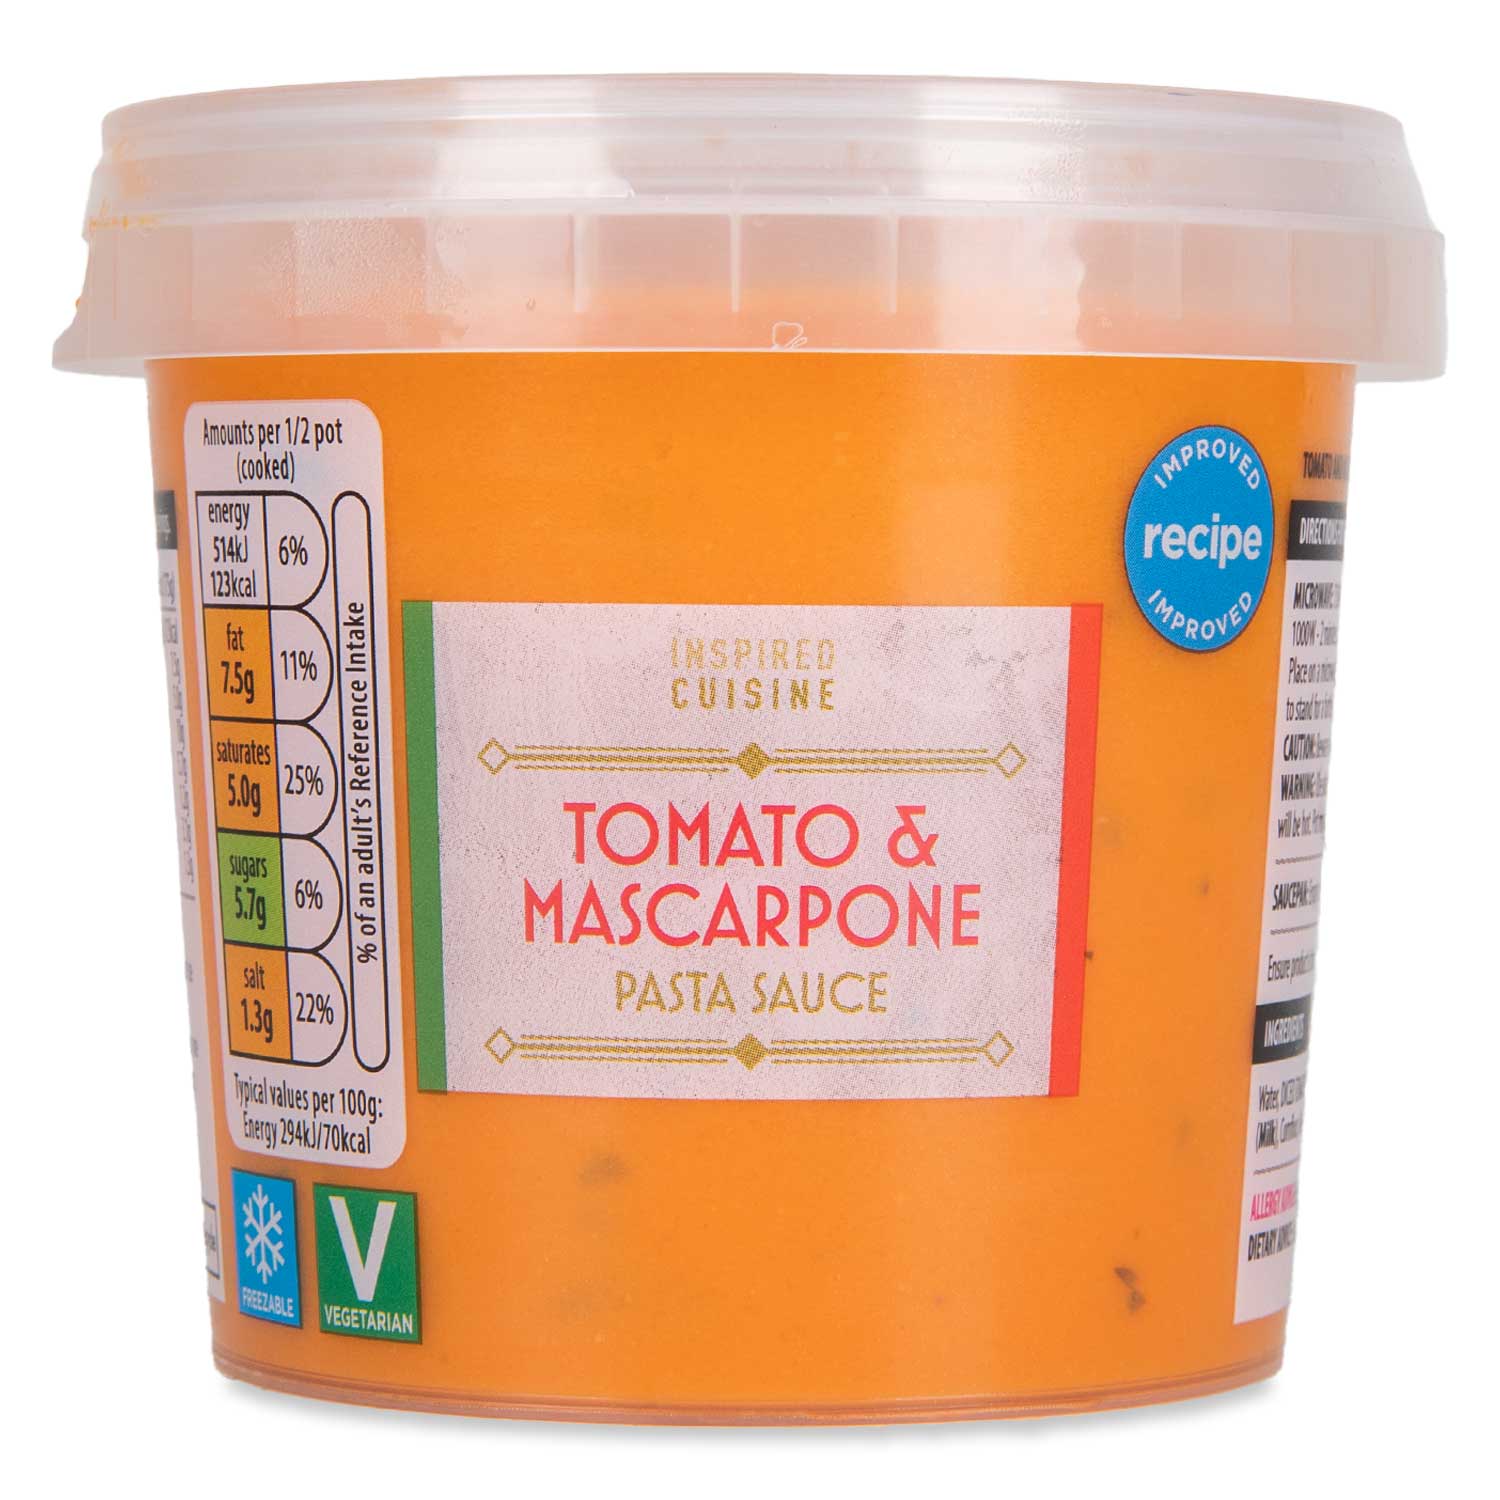 Inspired Cuisine Tomato & Mascarpone Pasta Sauce 350g | ALDI